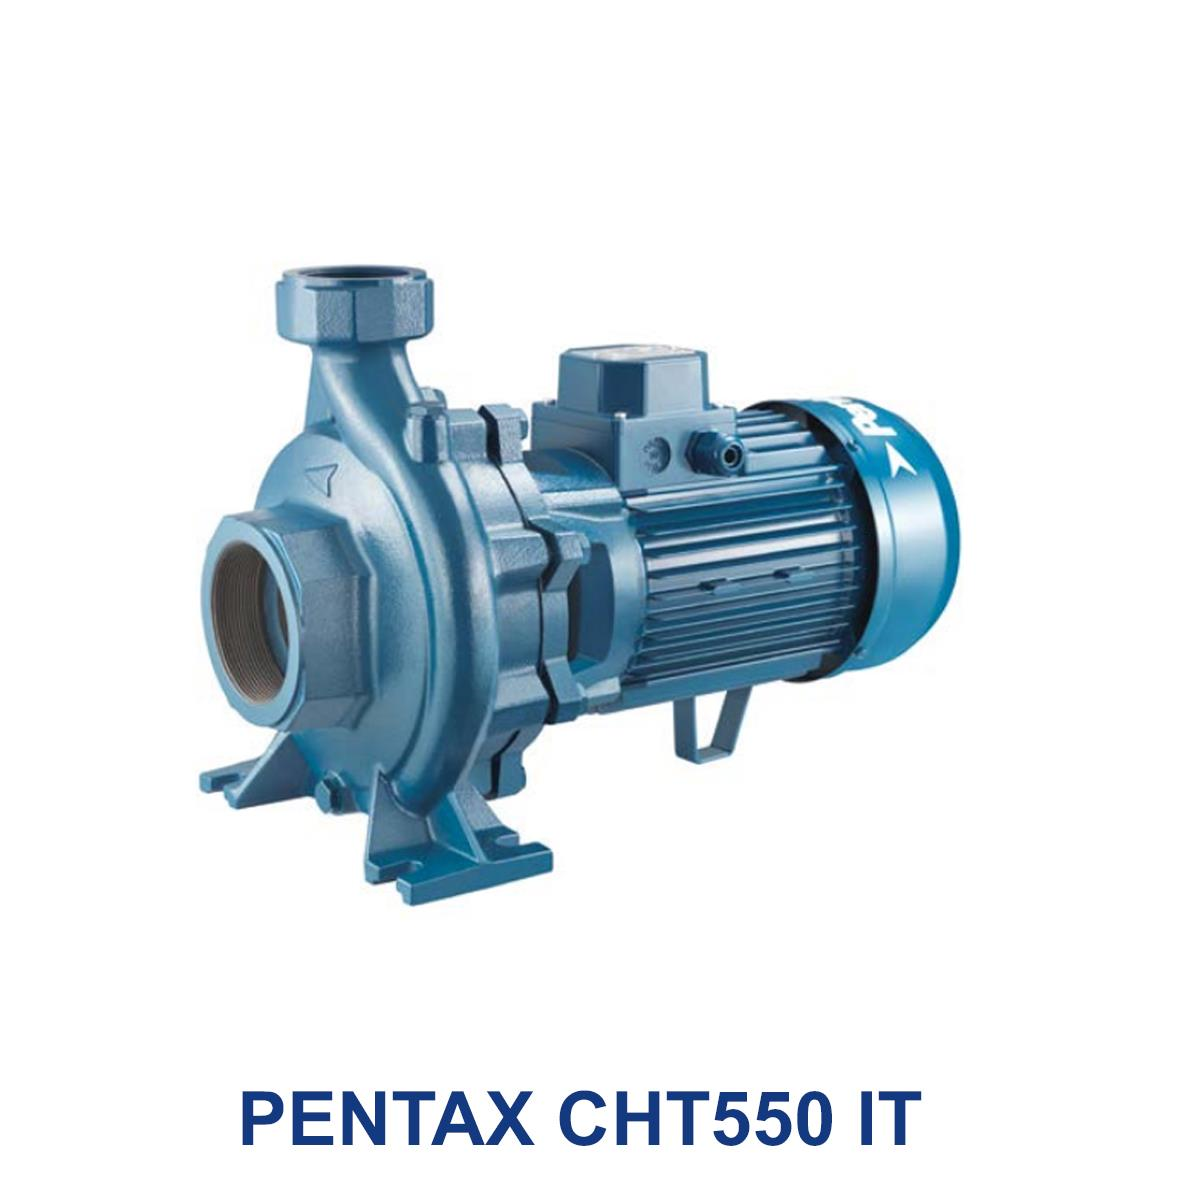 PENTAX-CHT550-IT